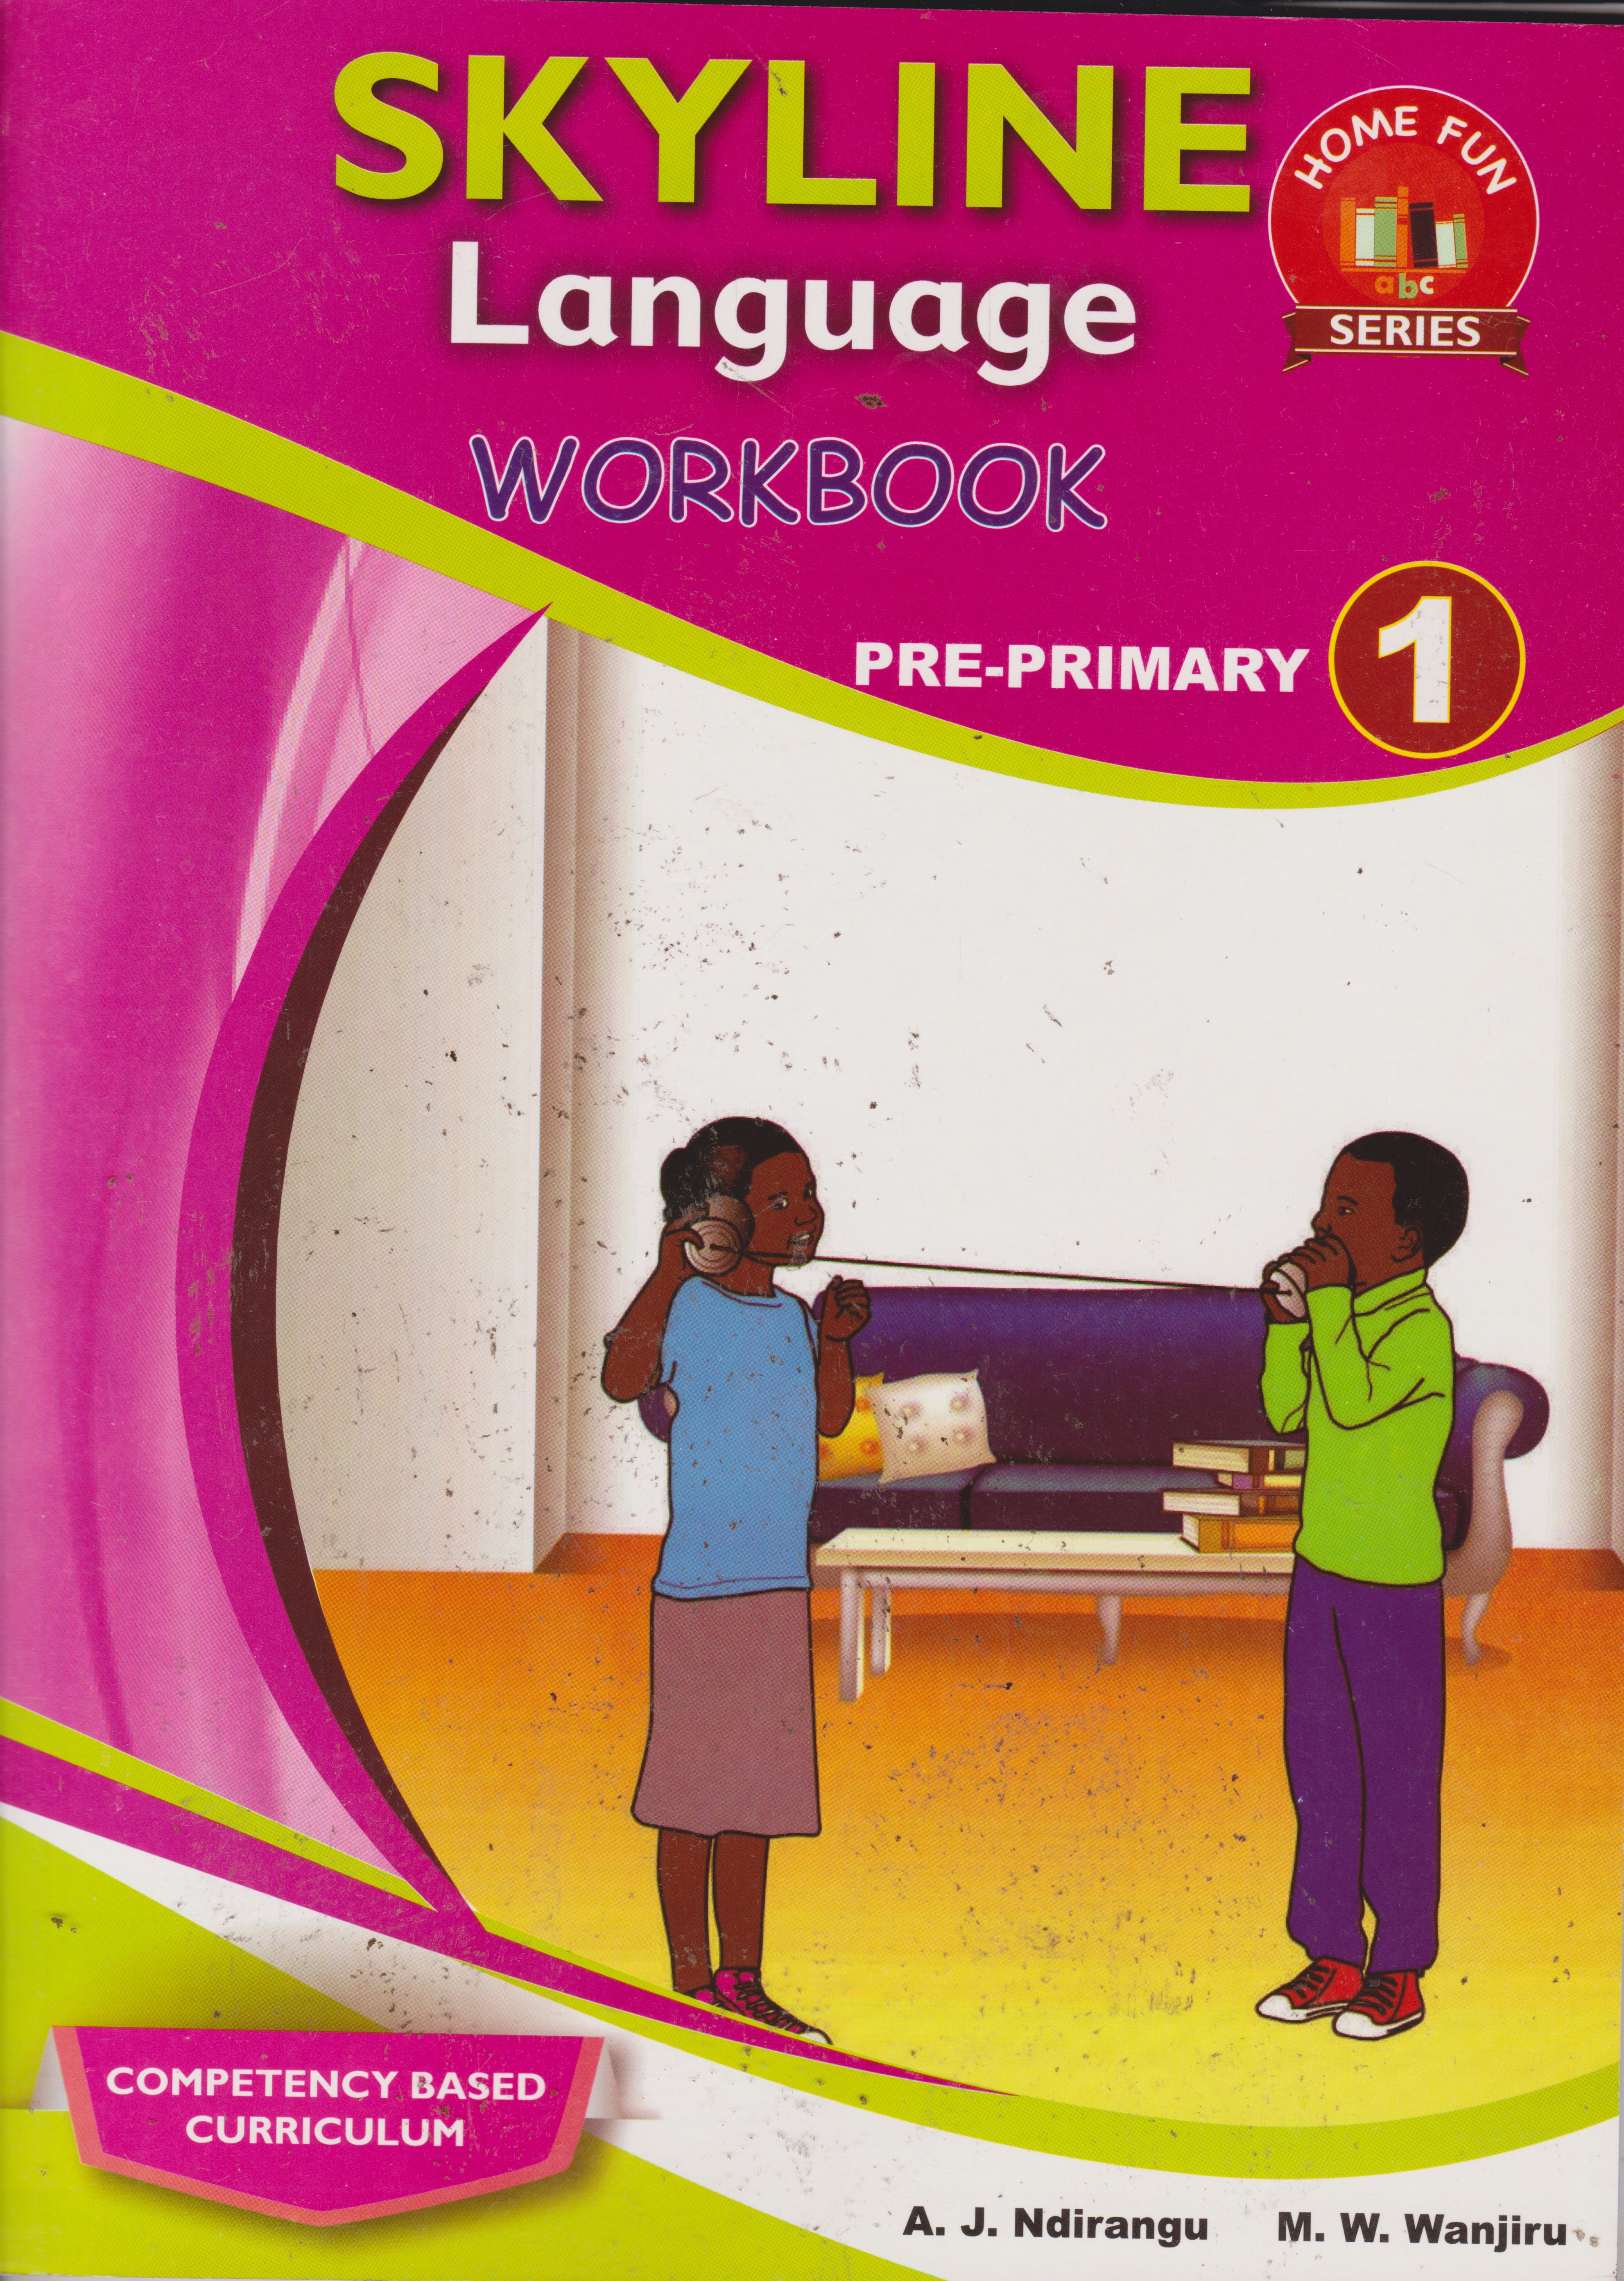 Skyline Language Workbook PP1